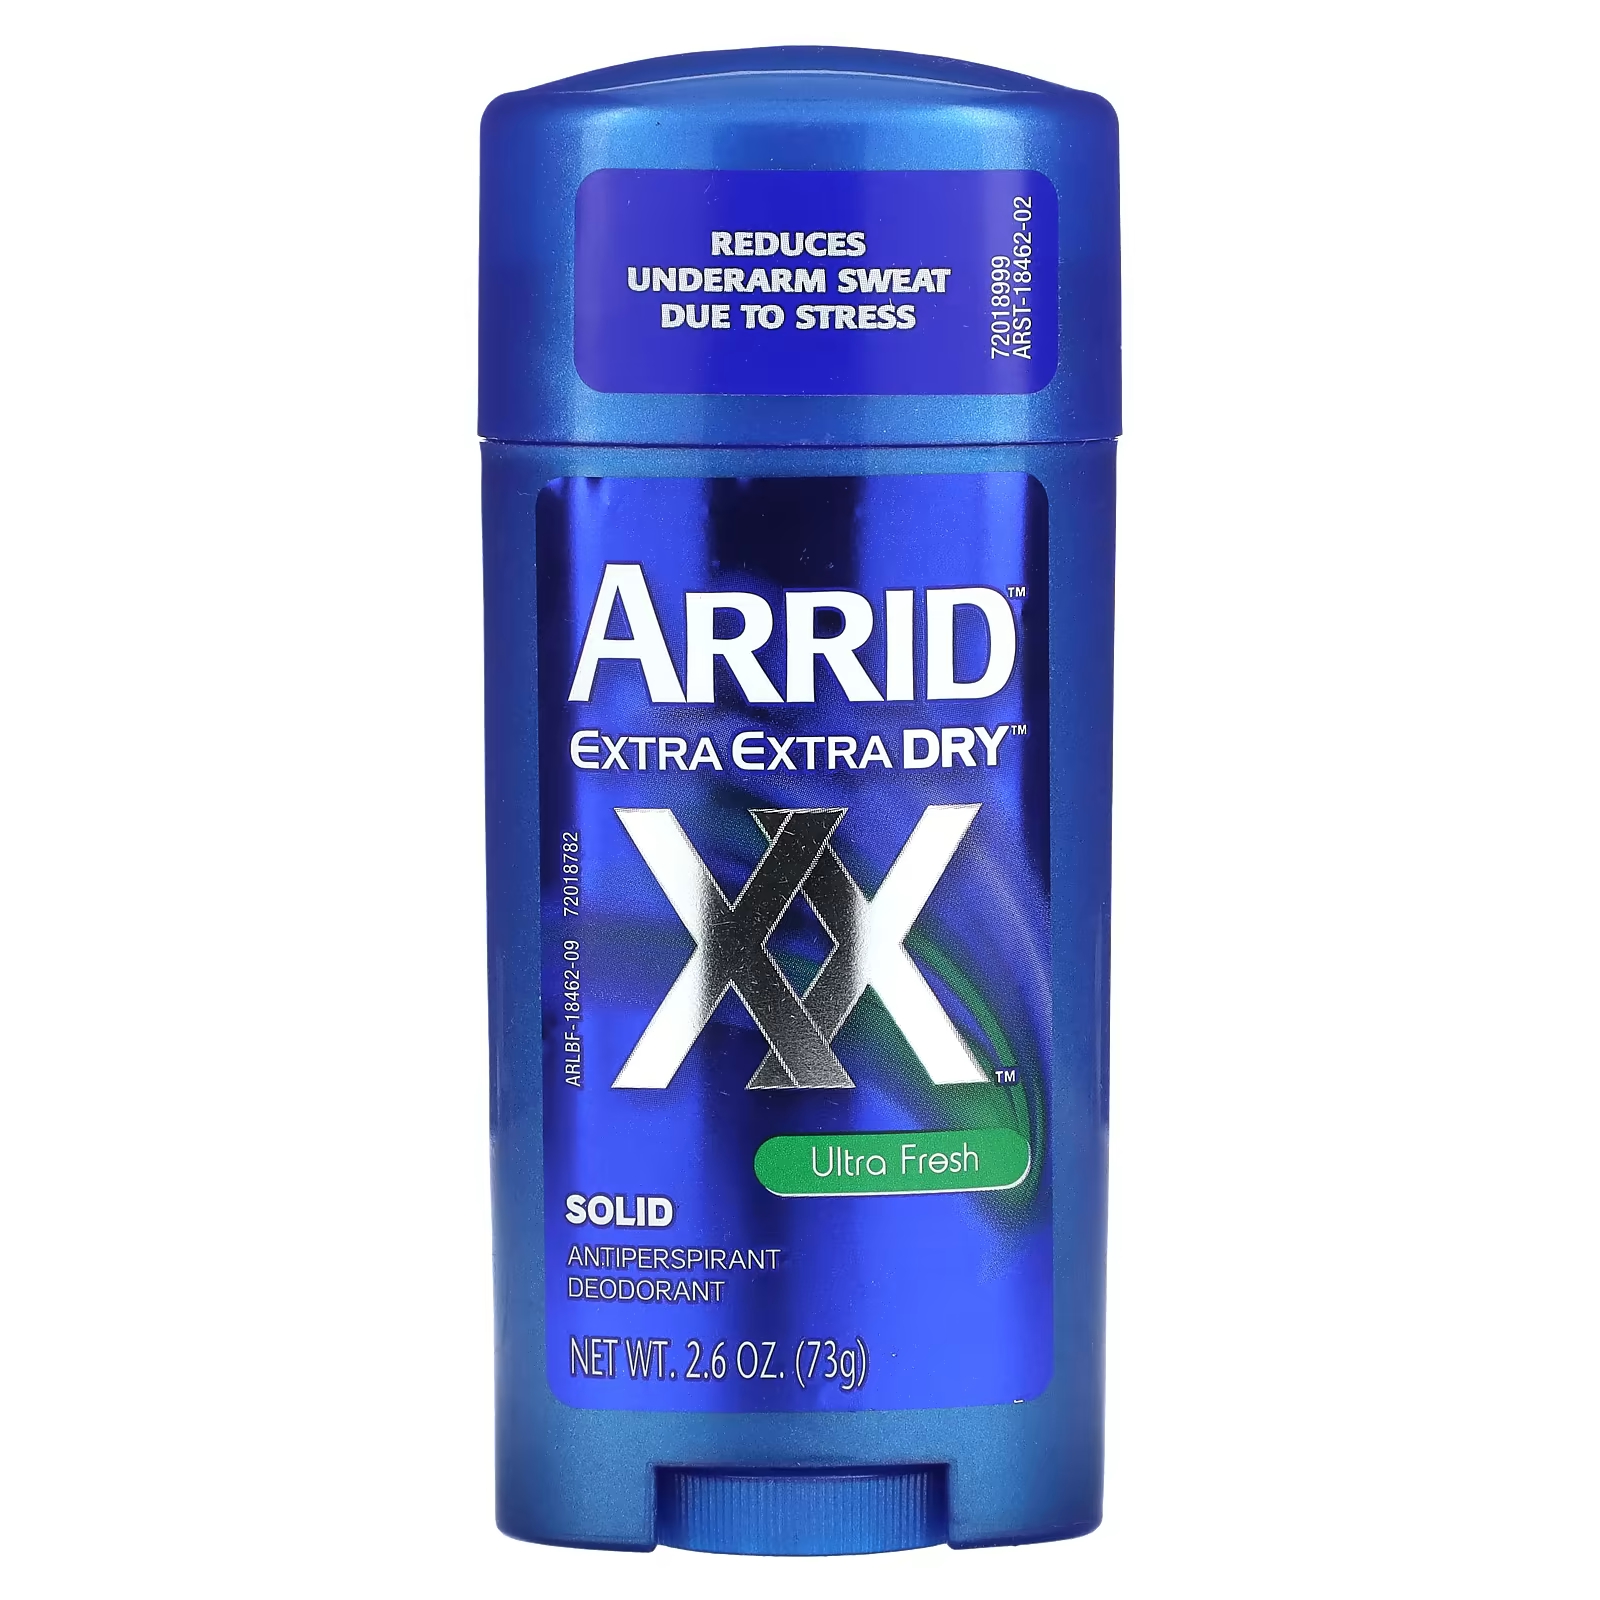 Дезодорант-антиперспирант твердый Arrid Extra Dry XX Ultra Fresh arrid extra extra dry xx твердый дезодорант антиперспирант прохладный душ 73 г 2 6 унции